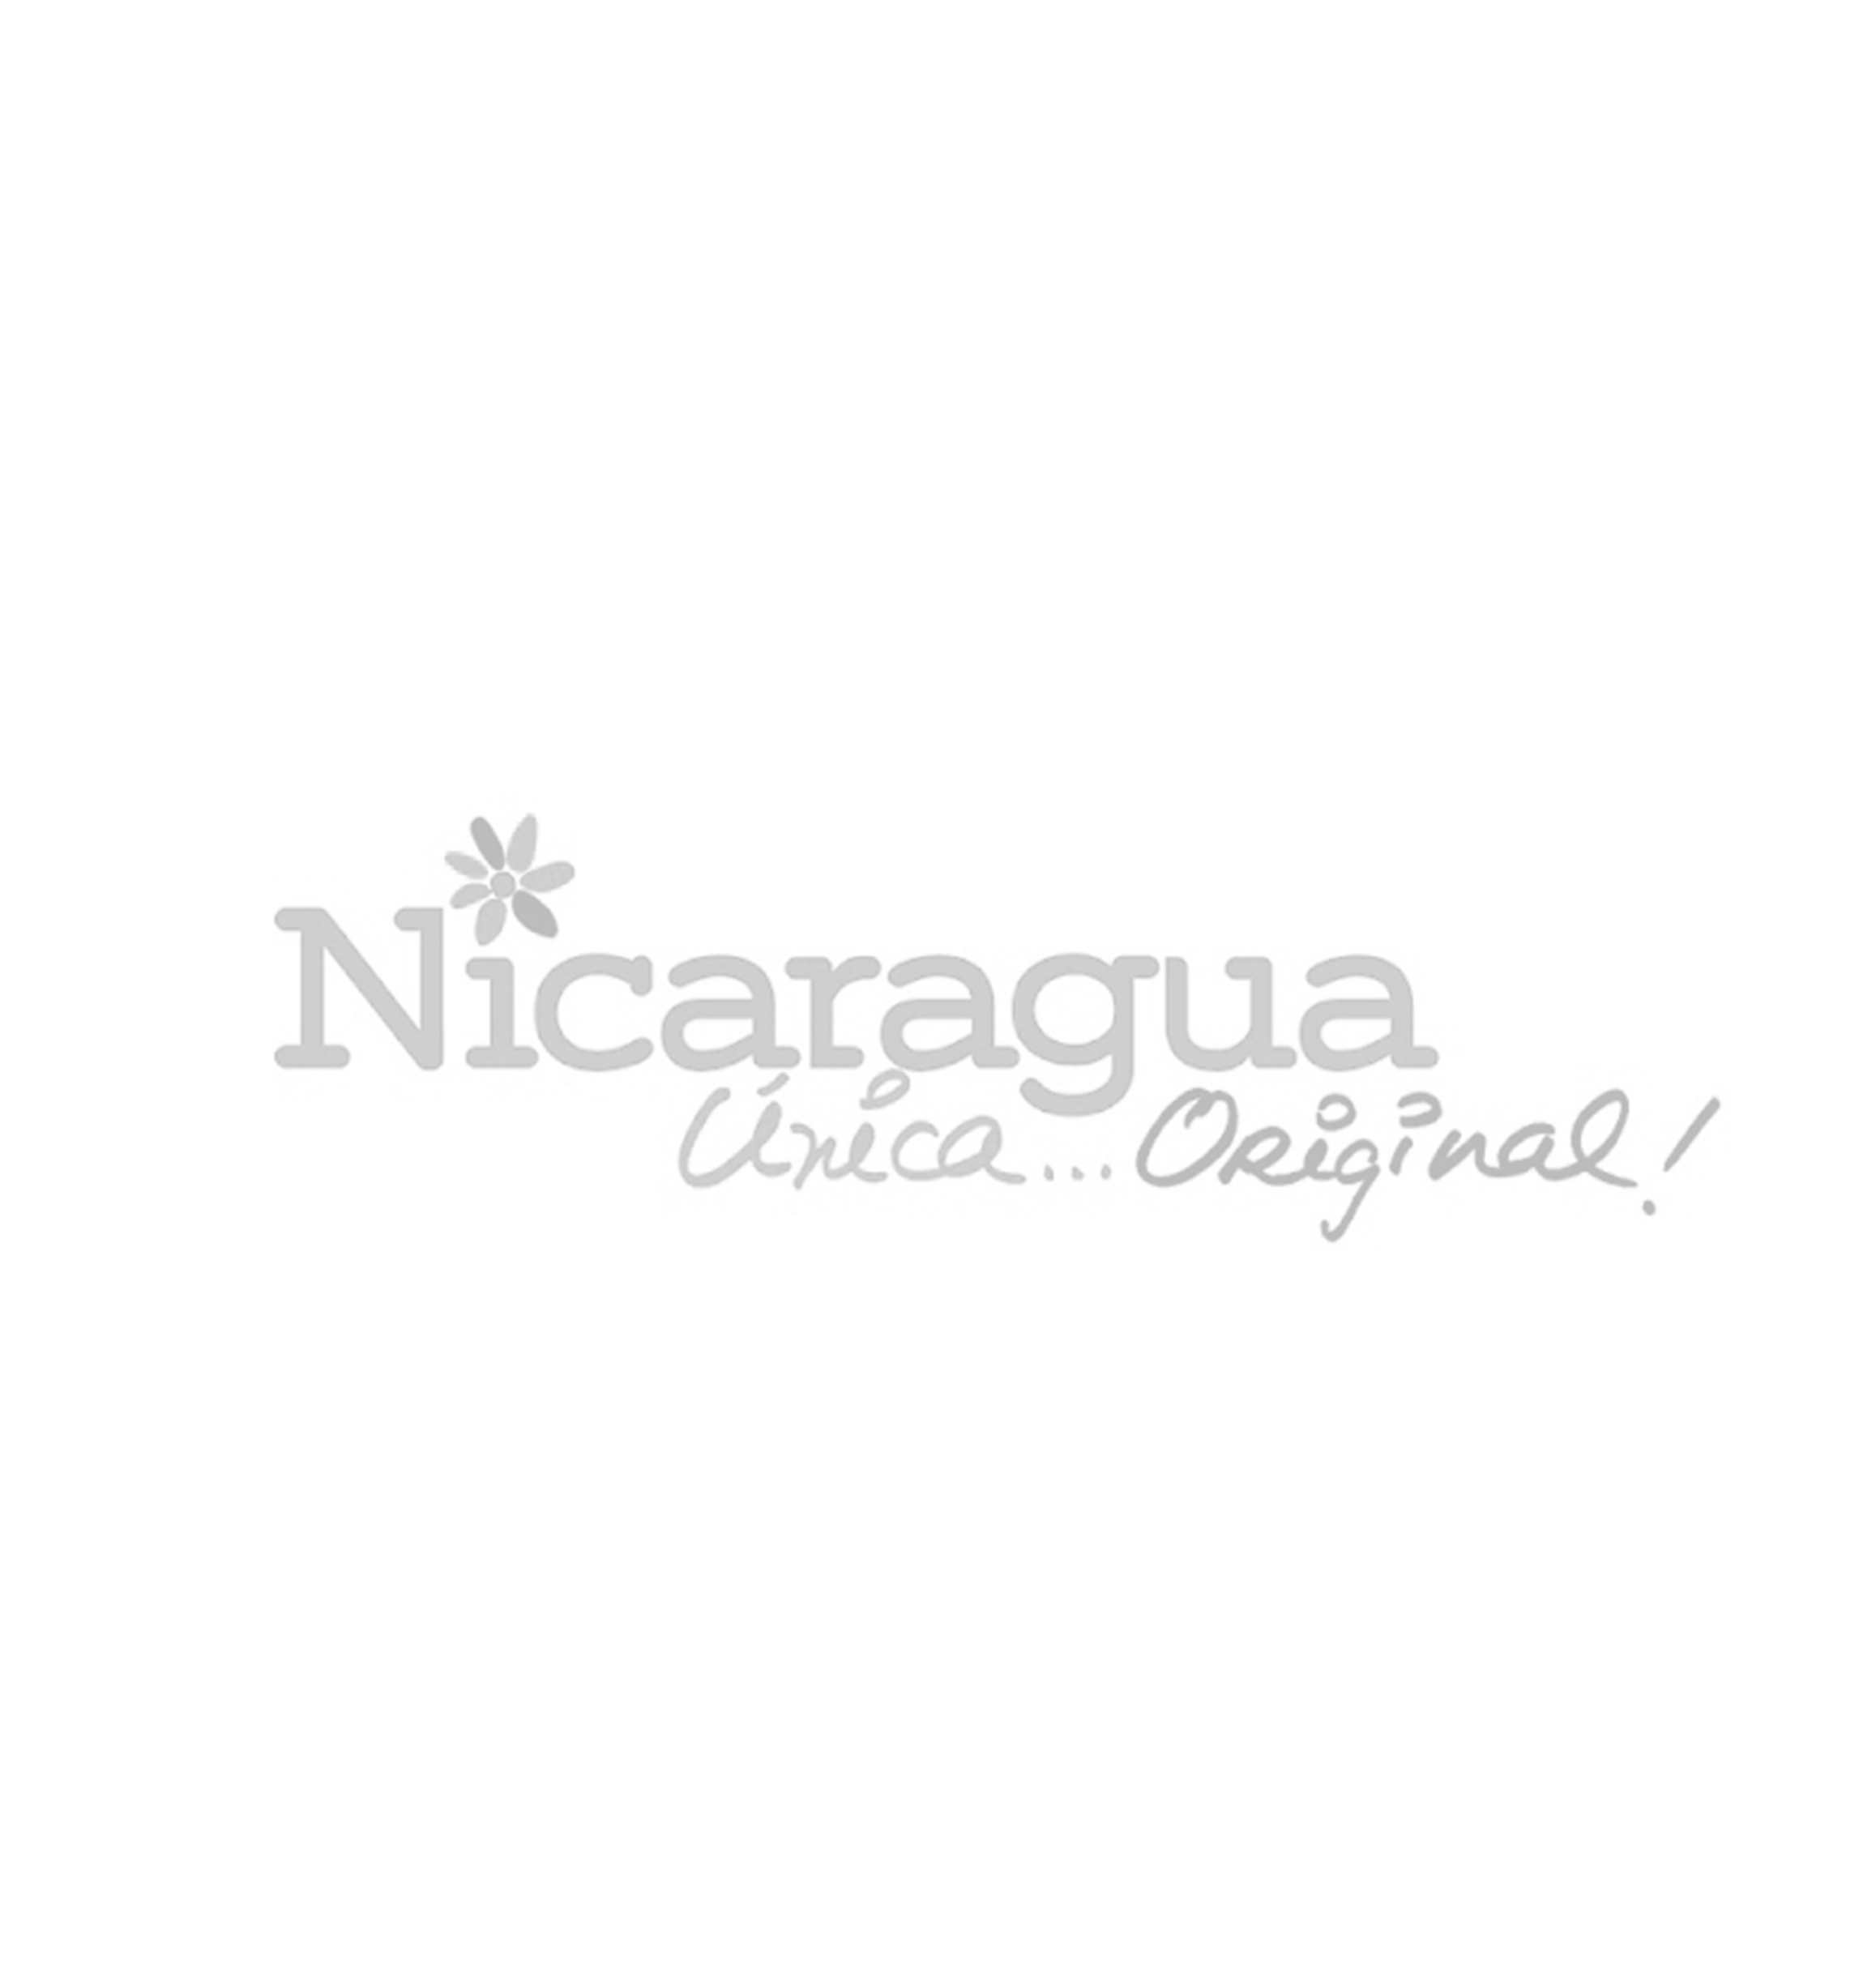 Nicaragua logo-2